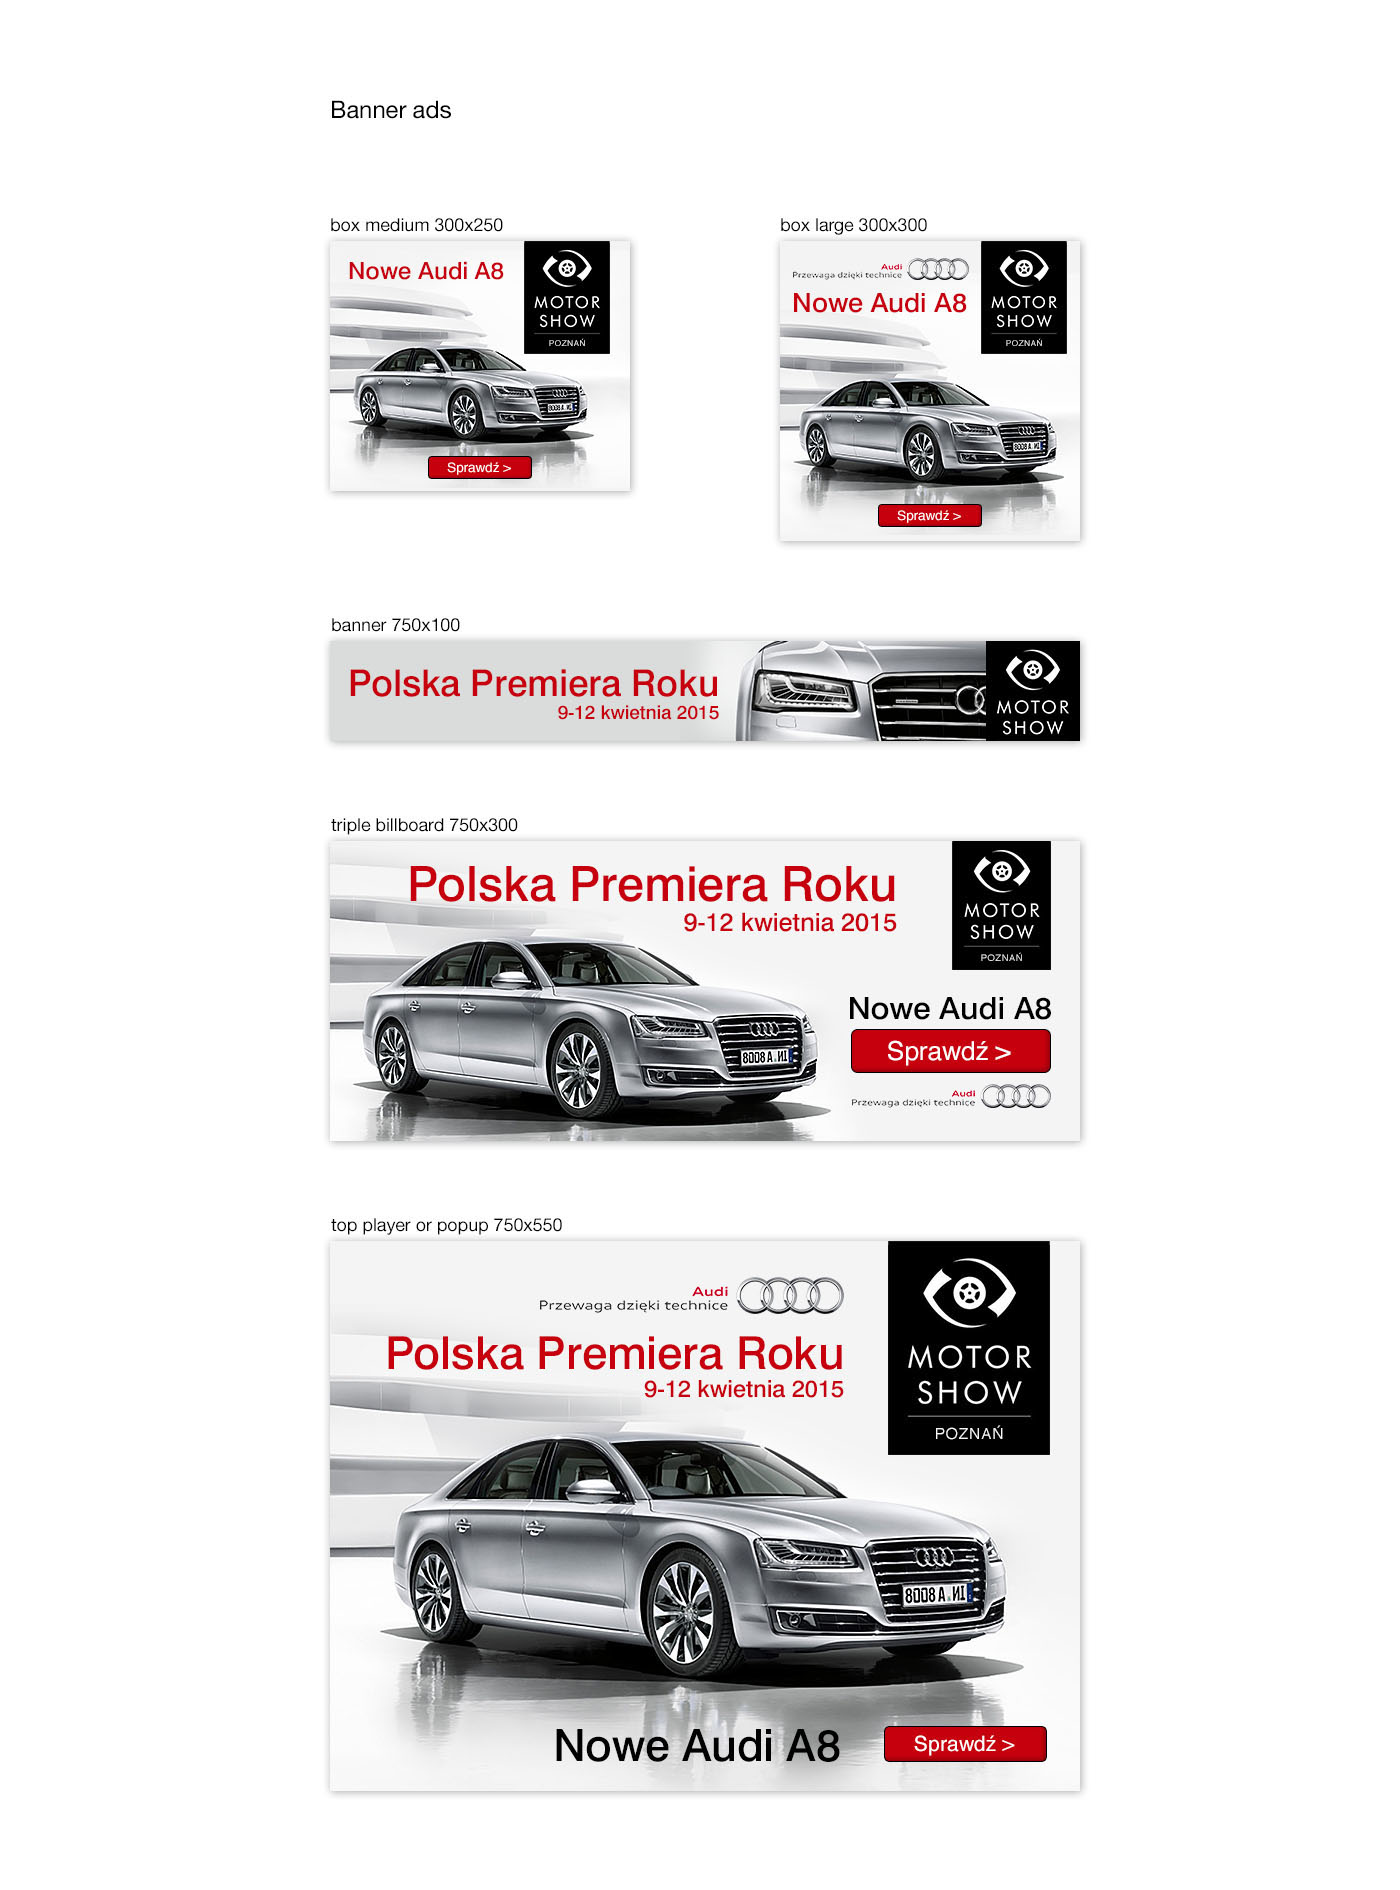 Audi car Fair traide Show poznan Motor Outdoor banner ads